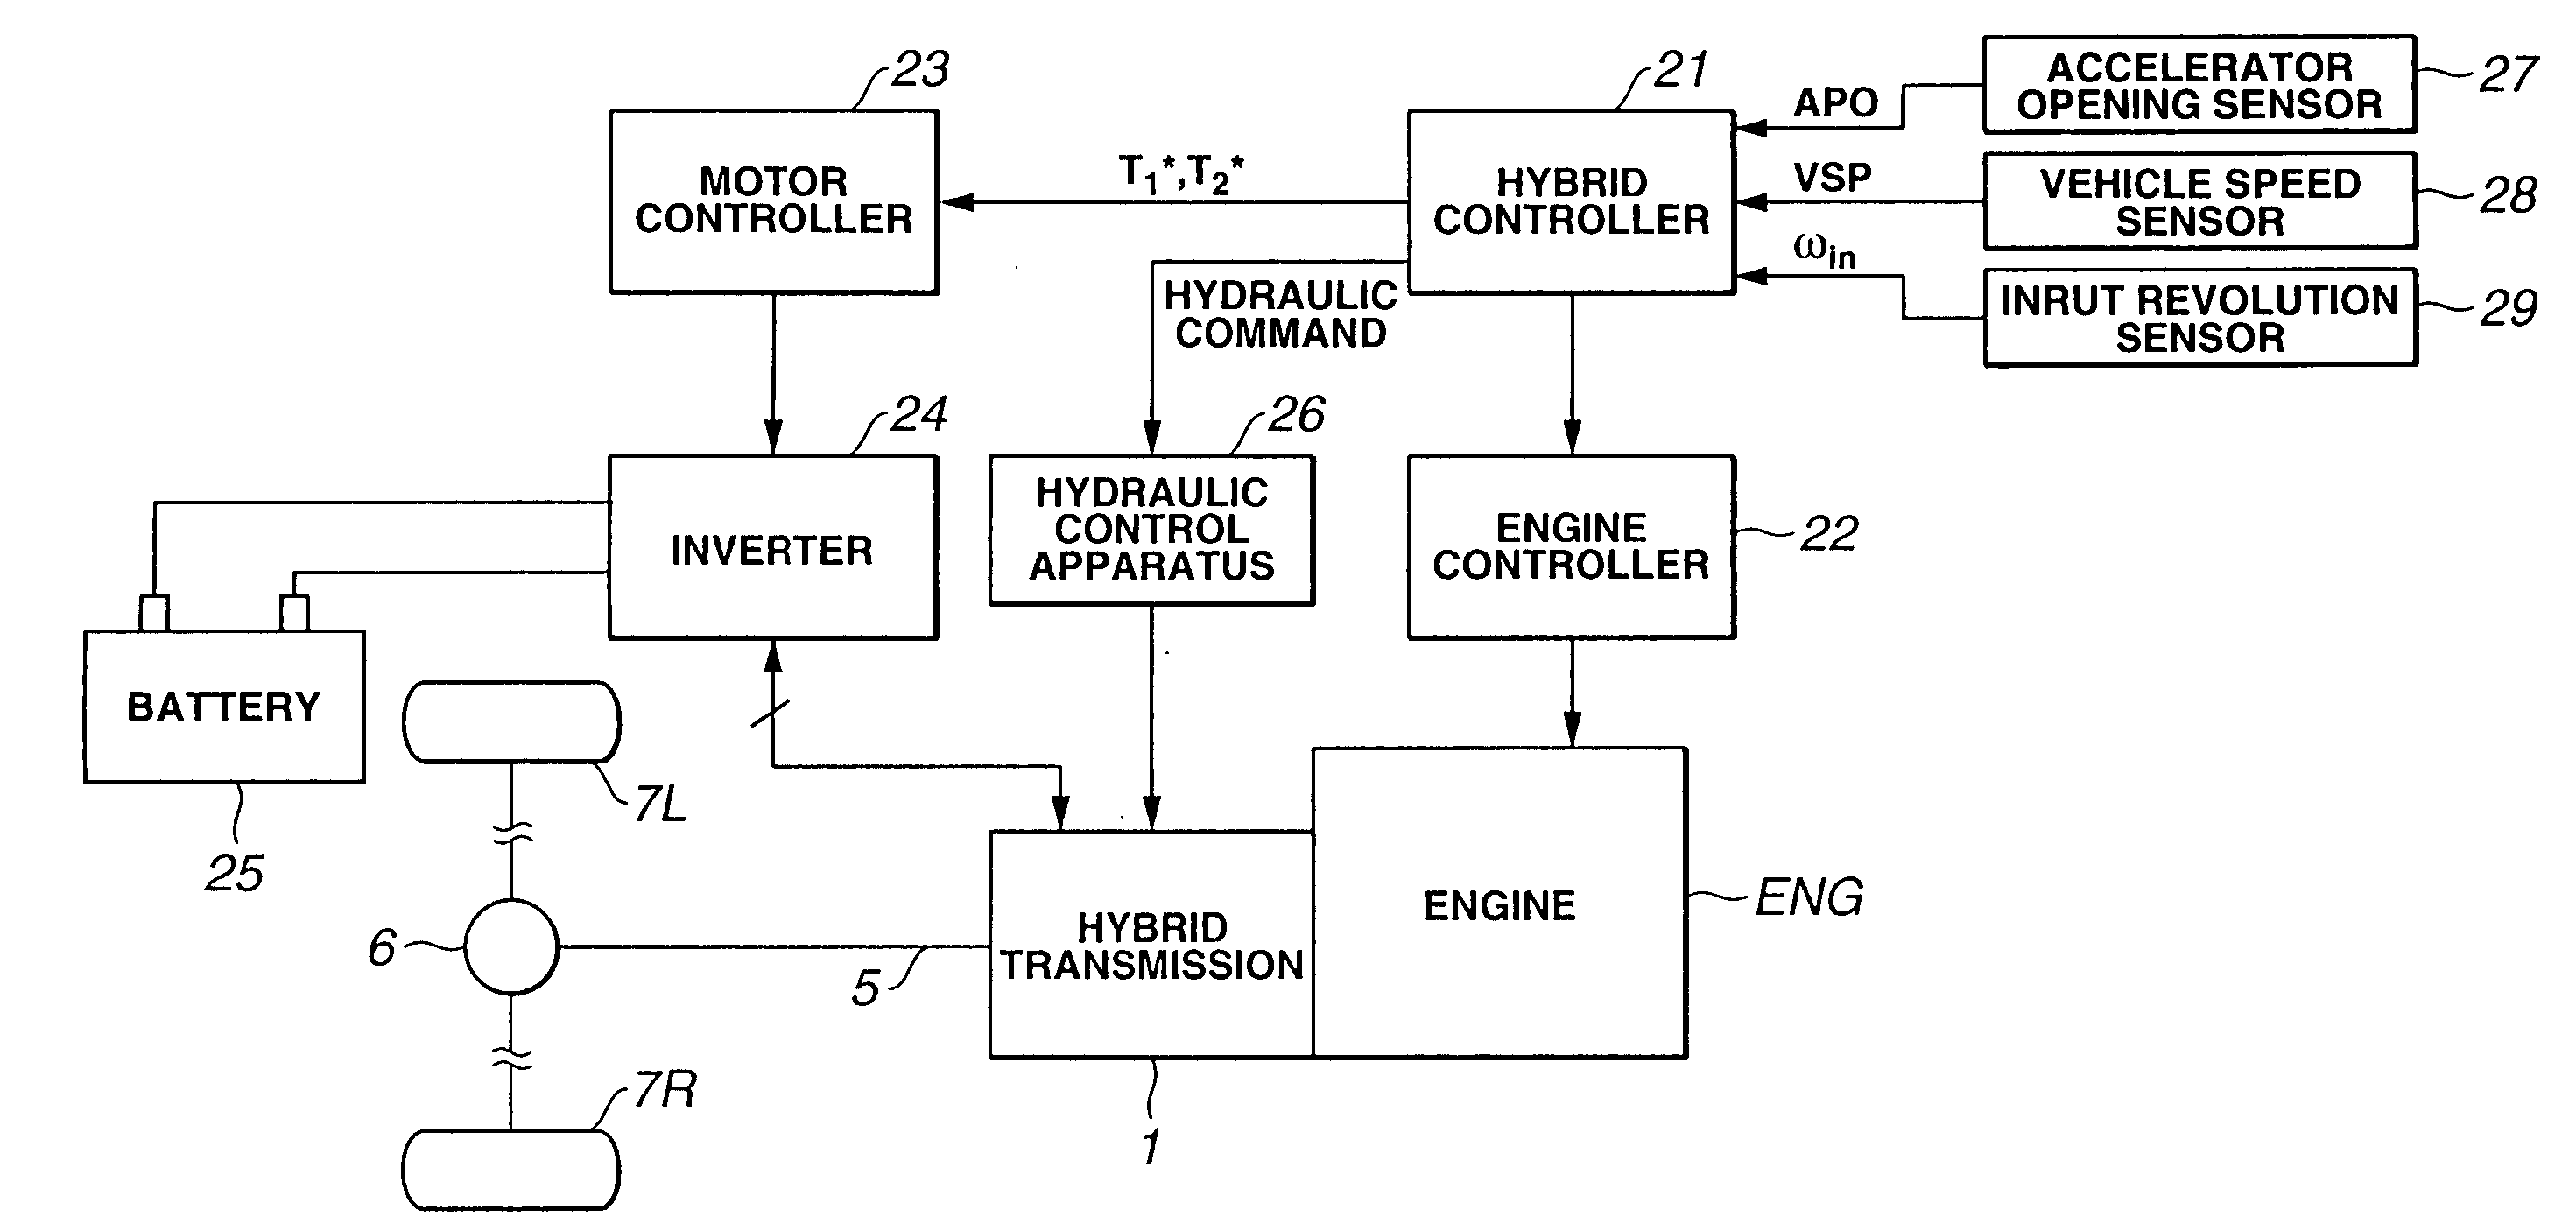 Shift control system of hybrid transmission